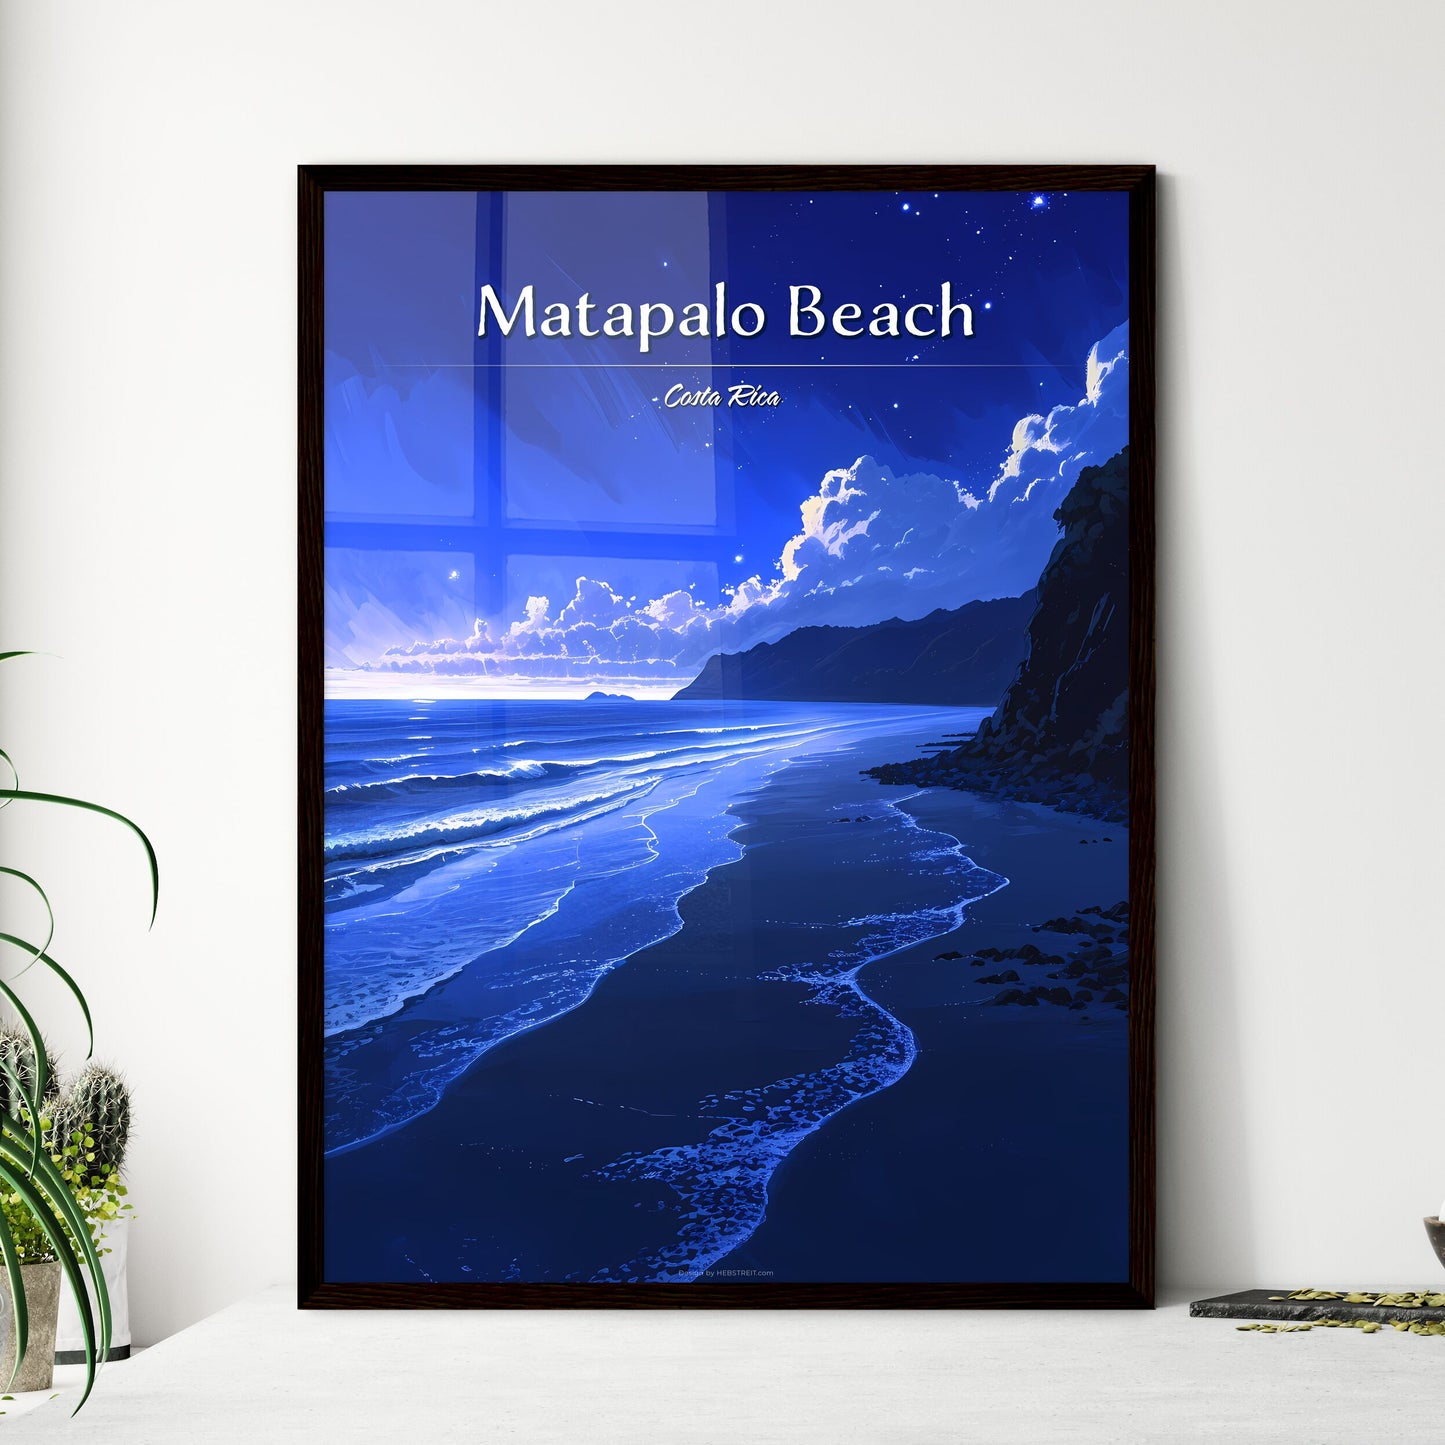 Matapalo Beach, Costa Rica - Art print of a beach with waves and rocks Default Title